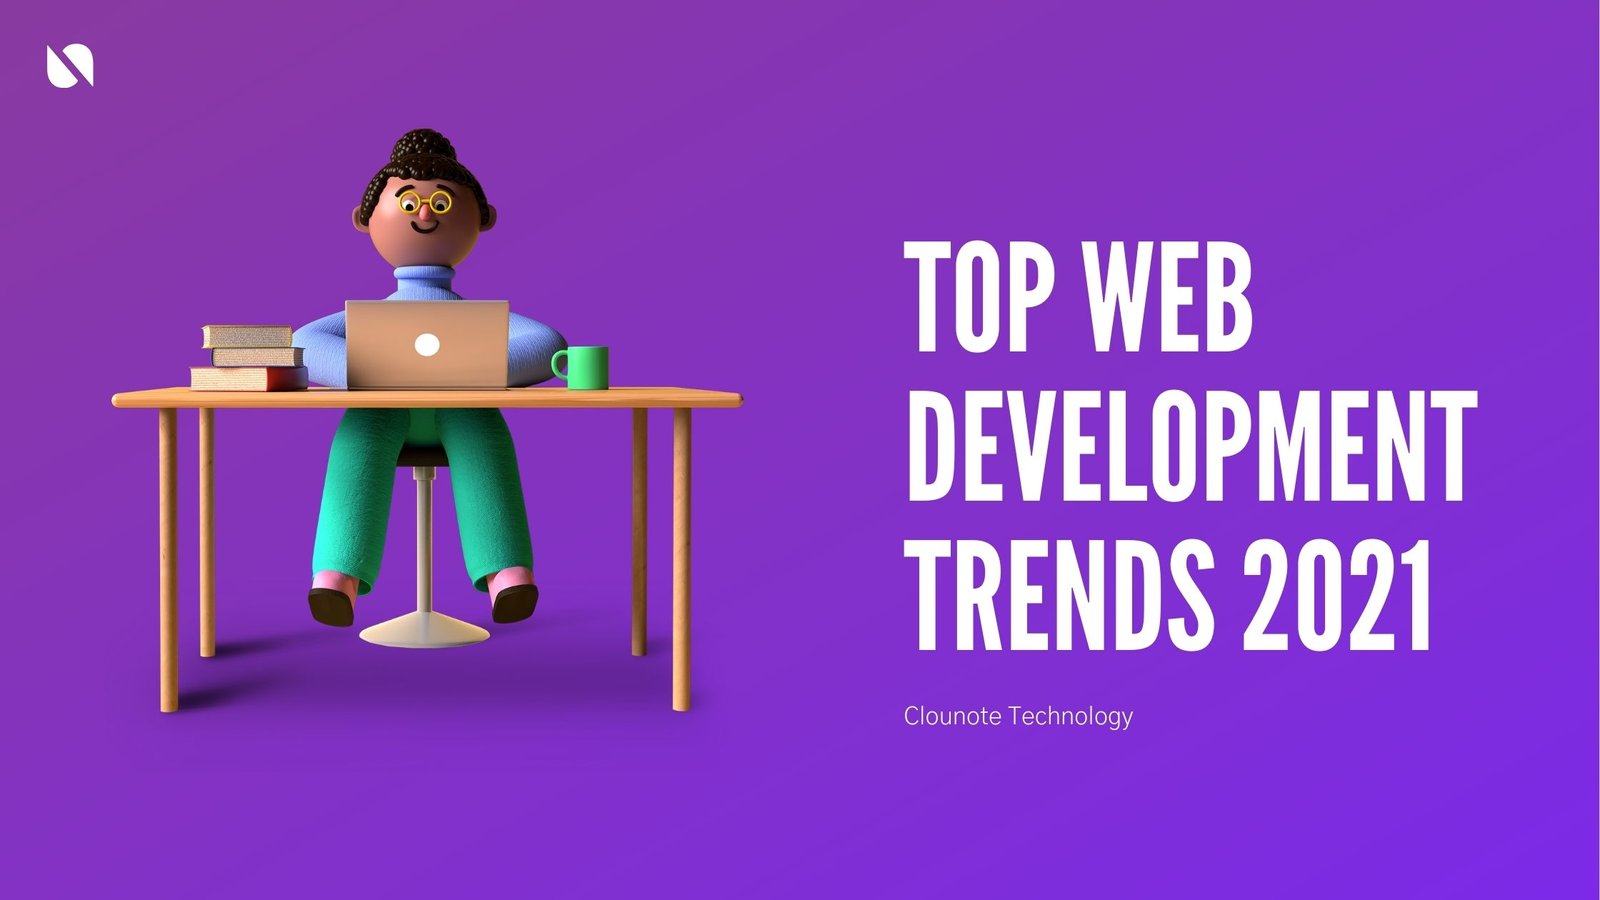 Top Web Development Trends to Follow